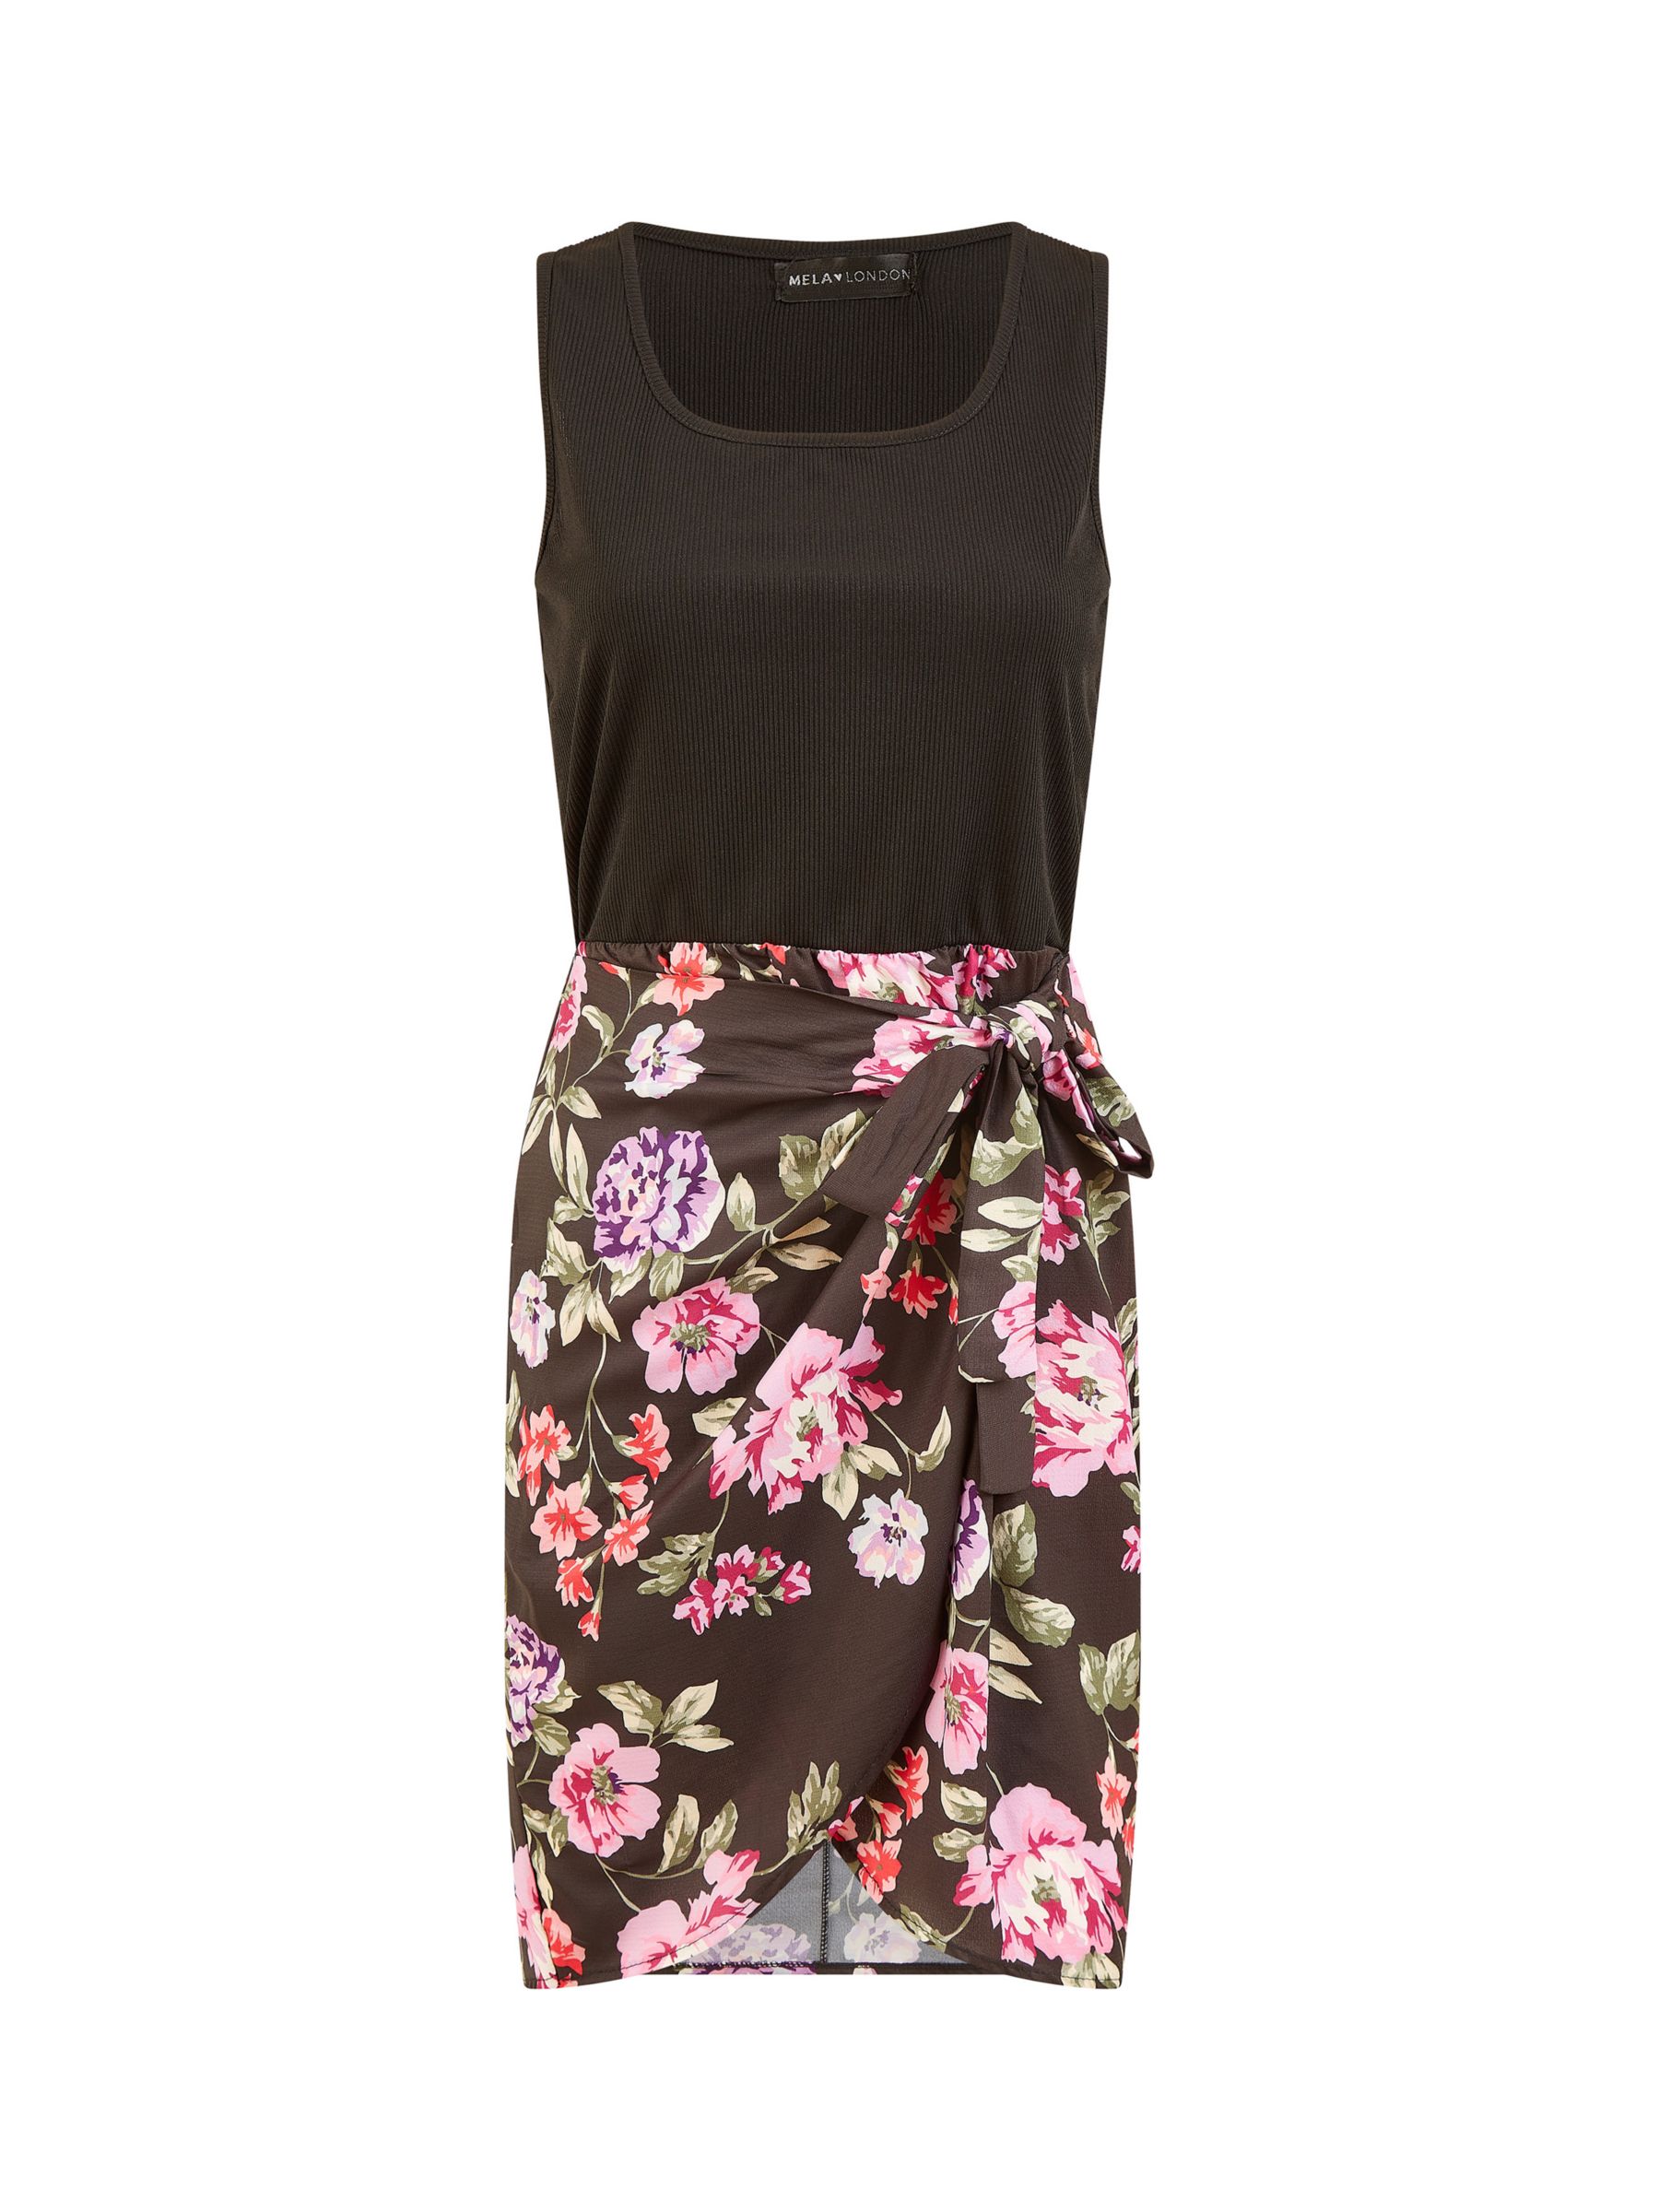 Mela London Floral Print Wrap Mini Dress, Black/Multi, 8